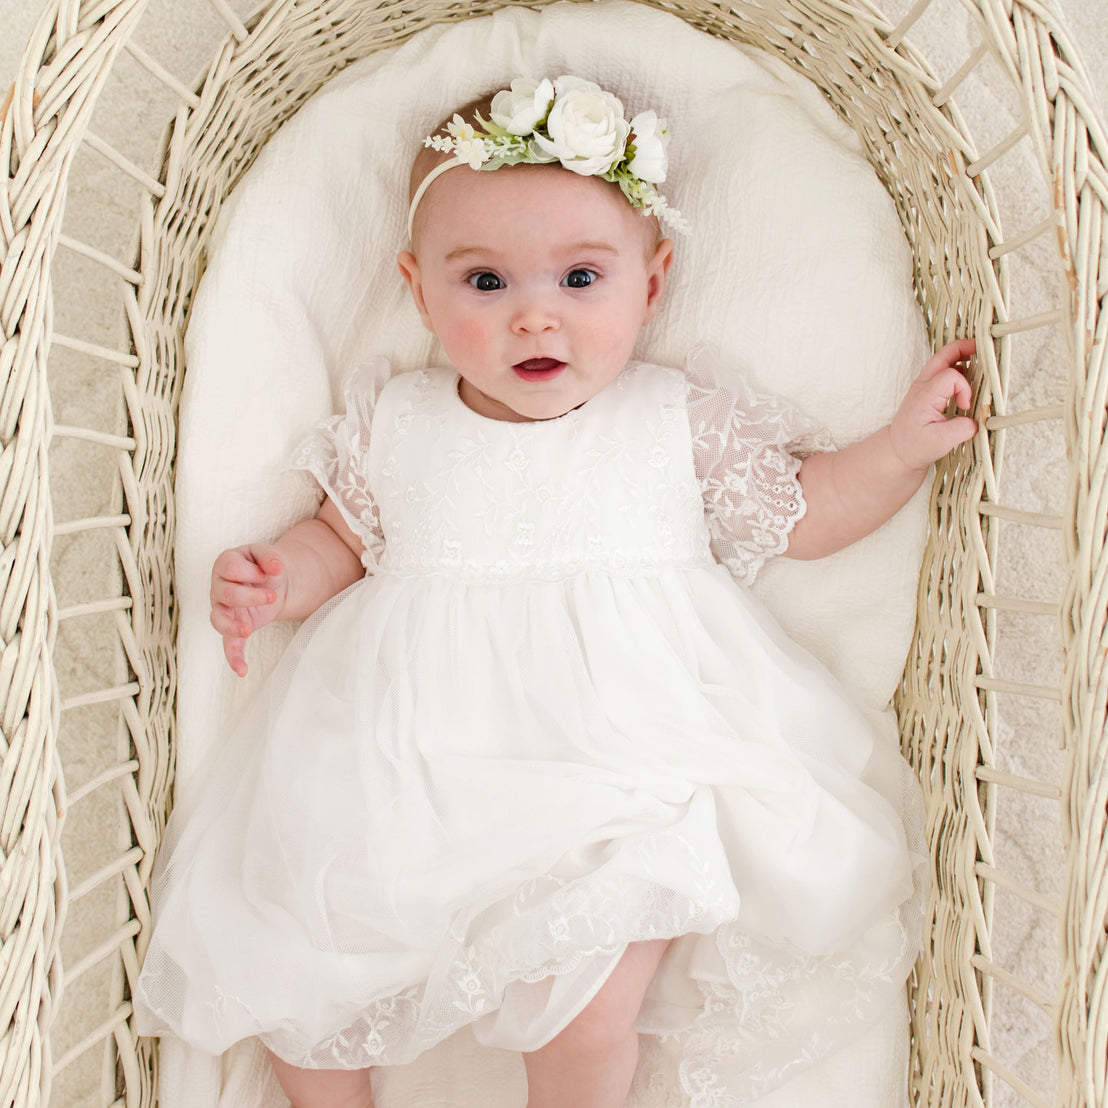 baby girl wearing Ella romper dress with a flower crown